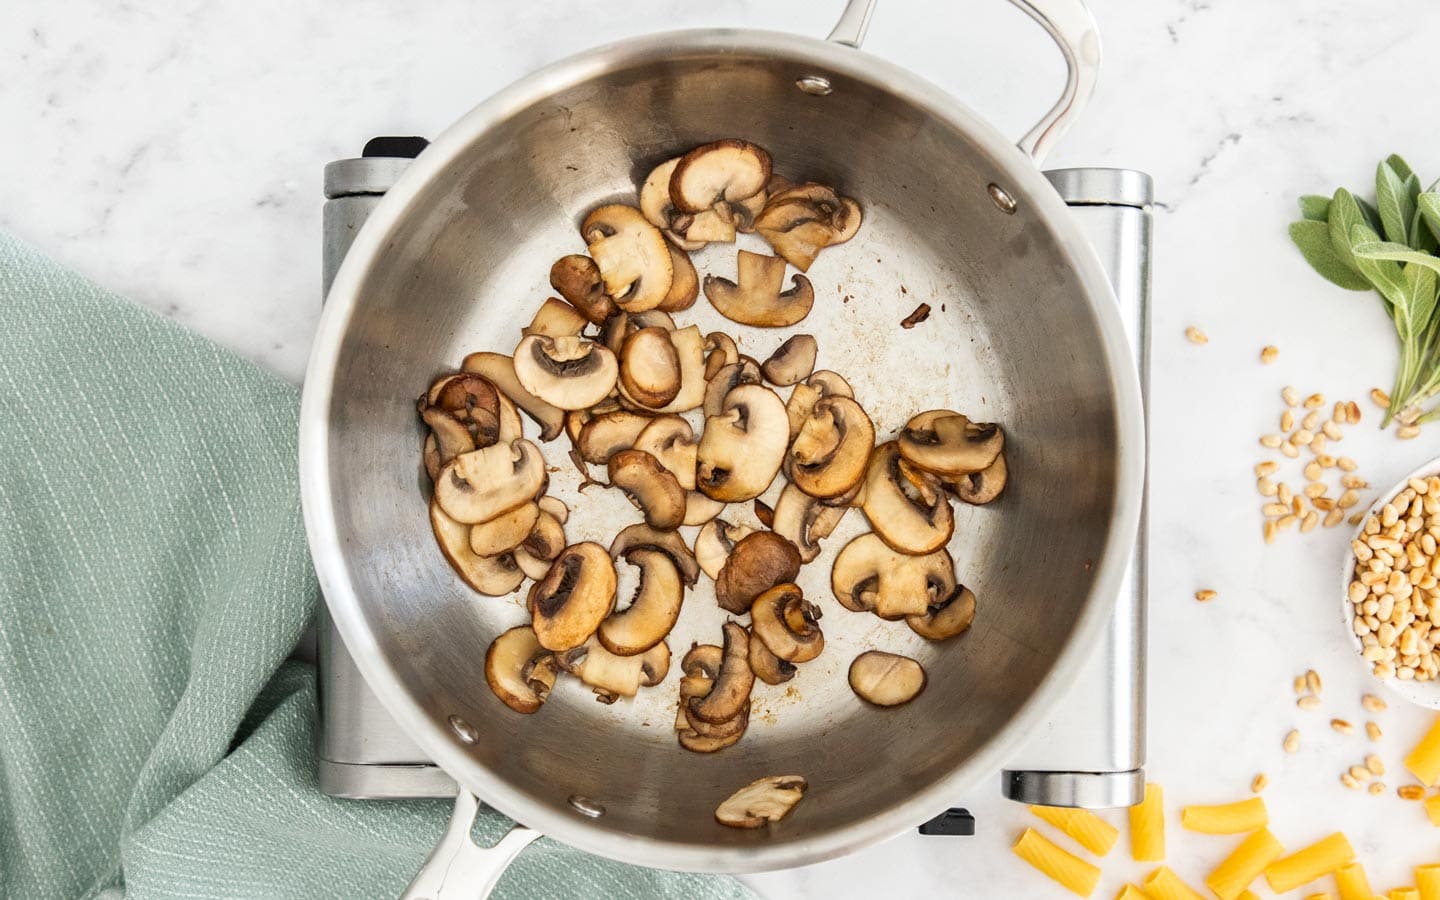 Mushroom being sauteed in a pan.